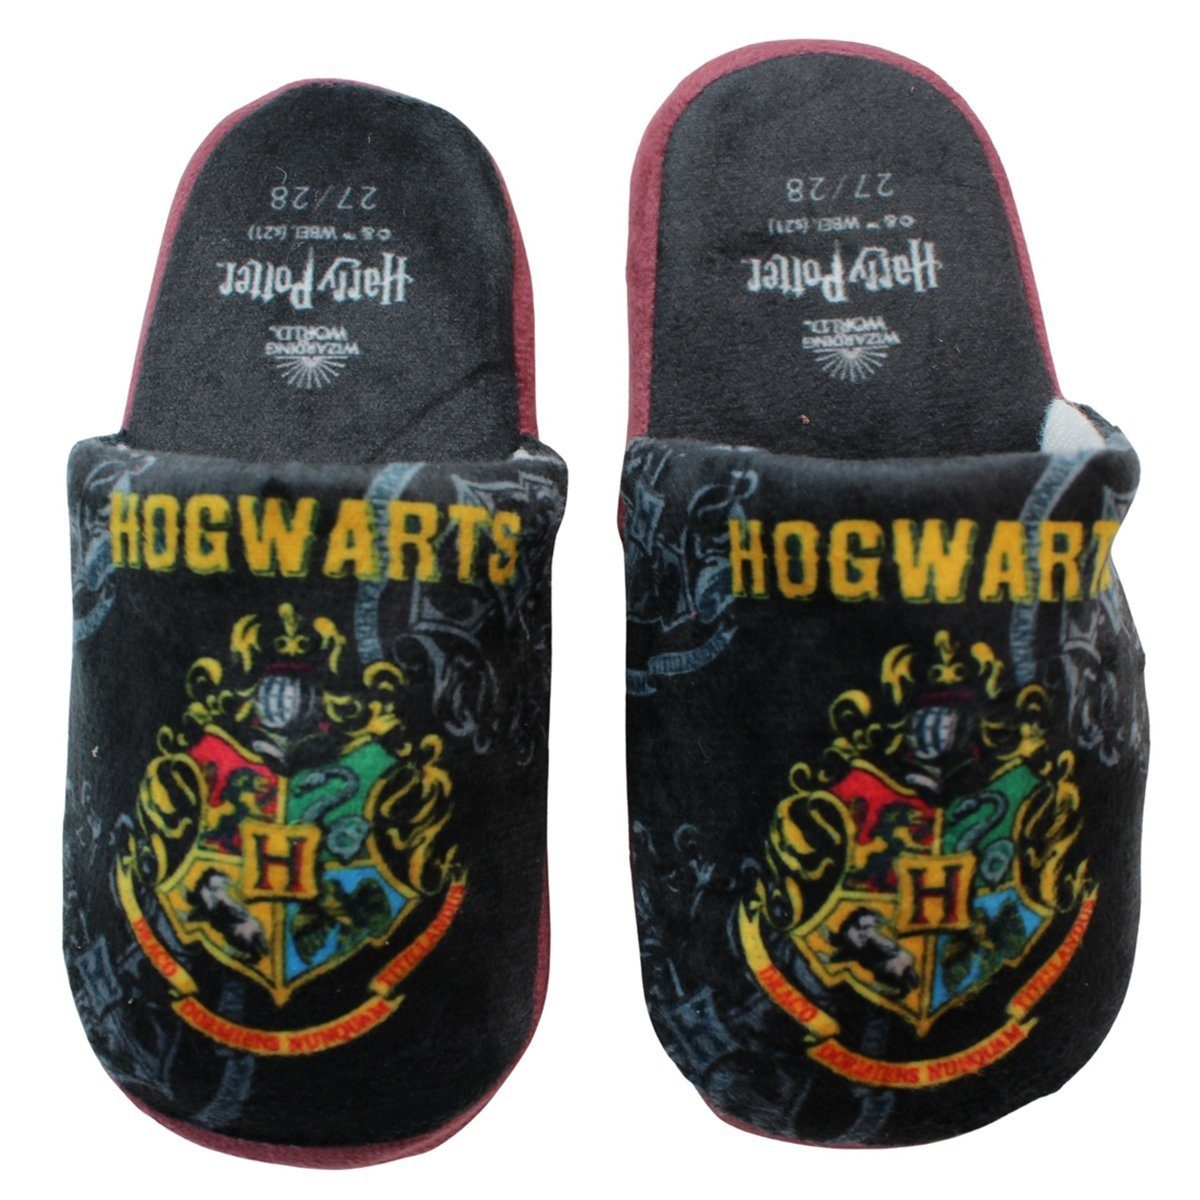 Harry Potter Harry Potter Hogwarts Kinder Mädchen Hausschuhe Slipper Pantoffel Gr. 27 bis 34 Schwarz